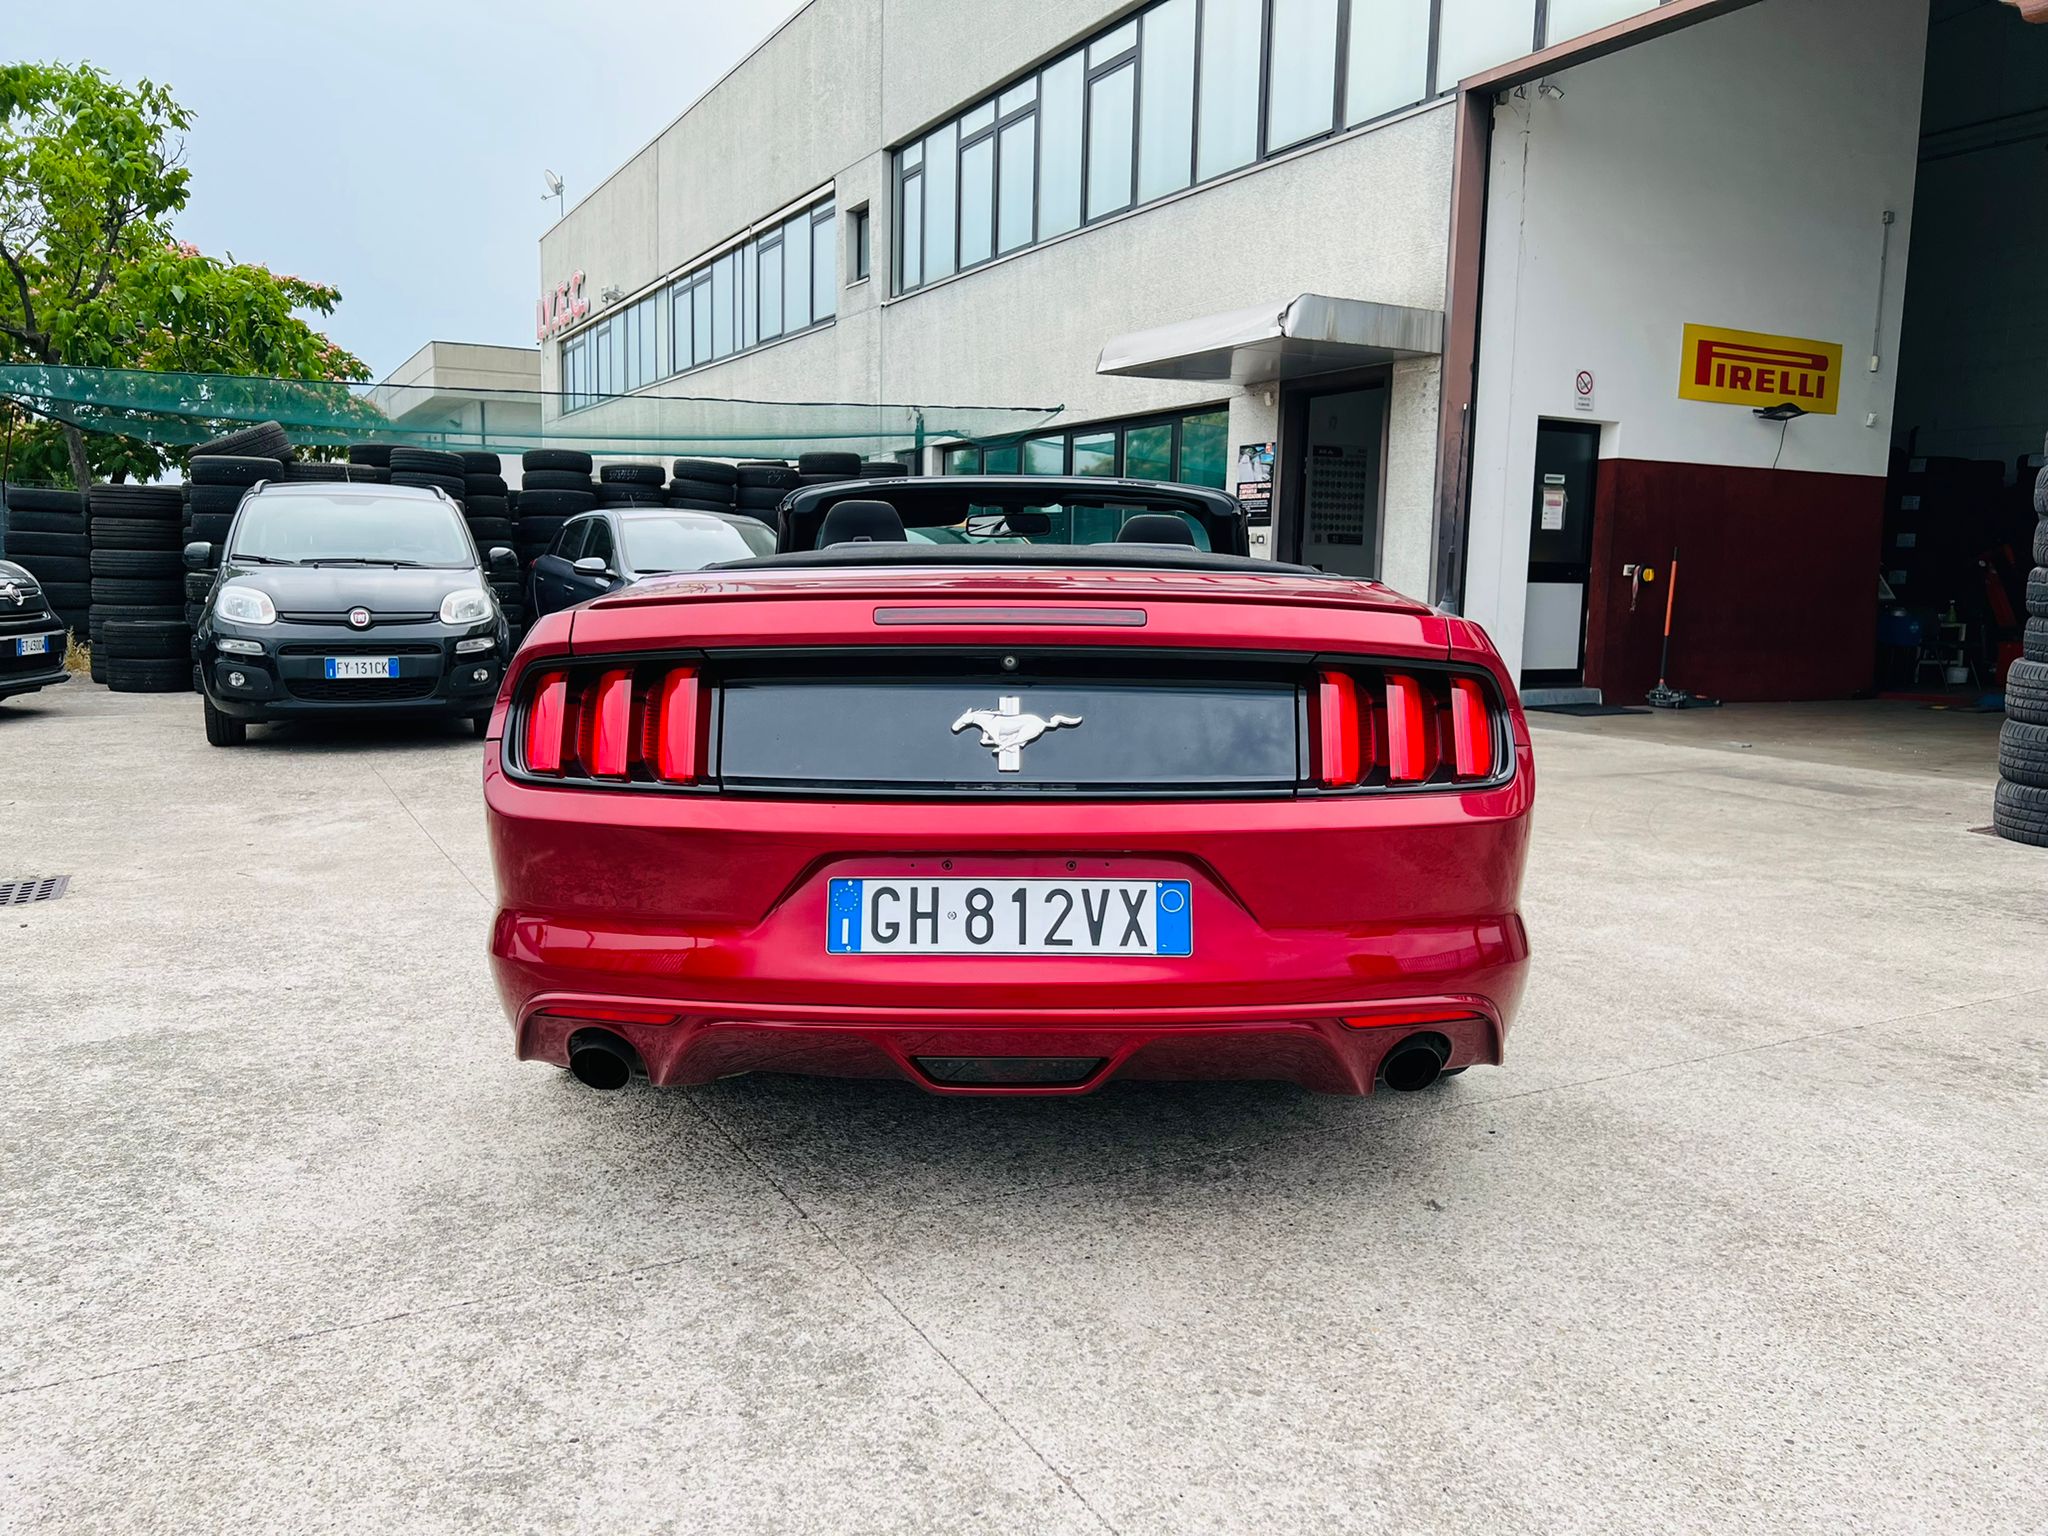 Noleggio Ford Mustang